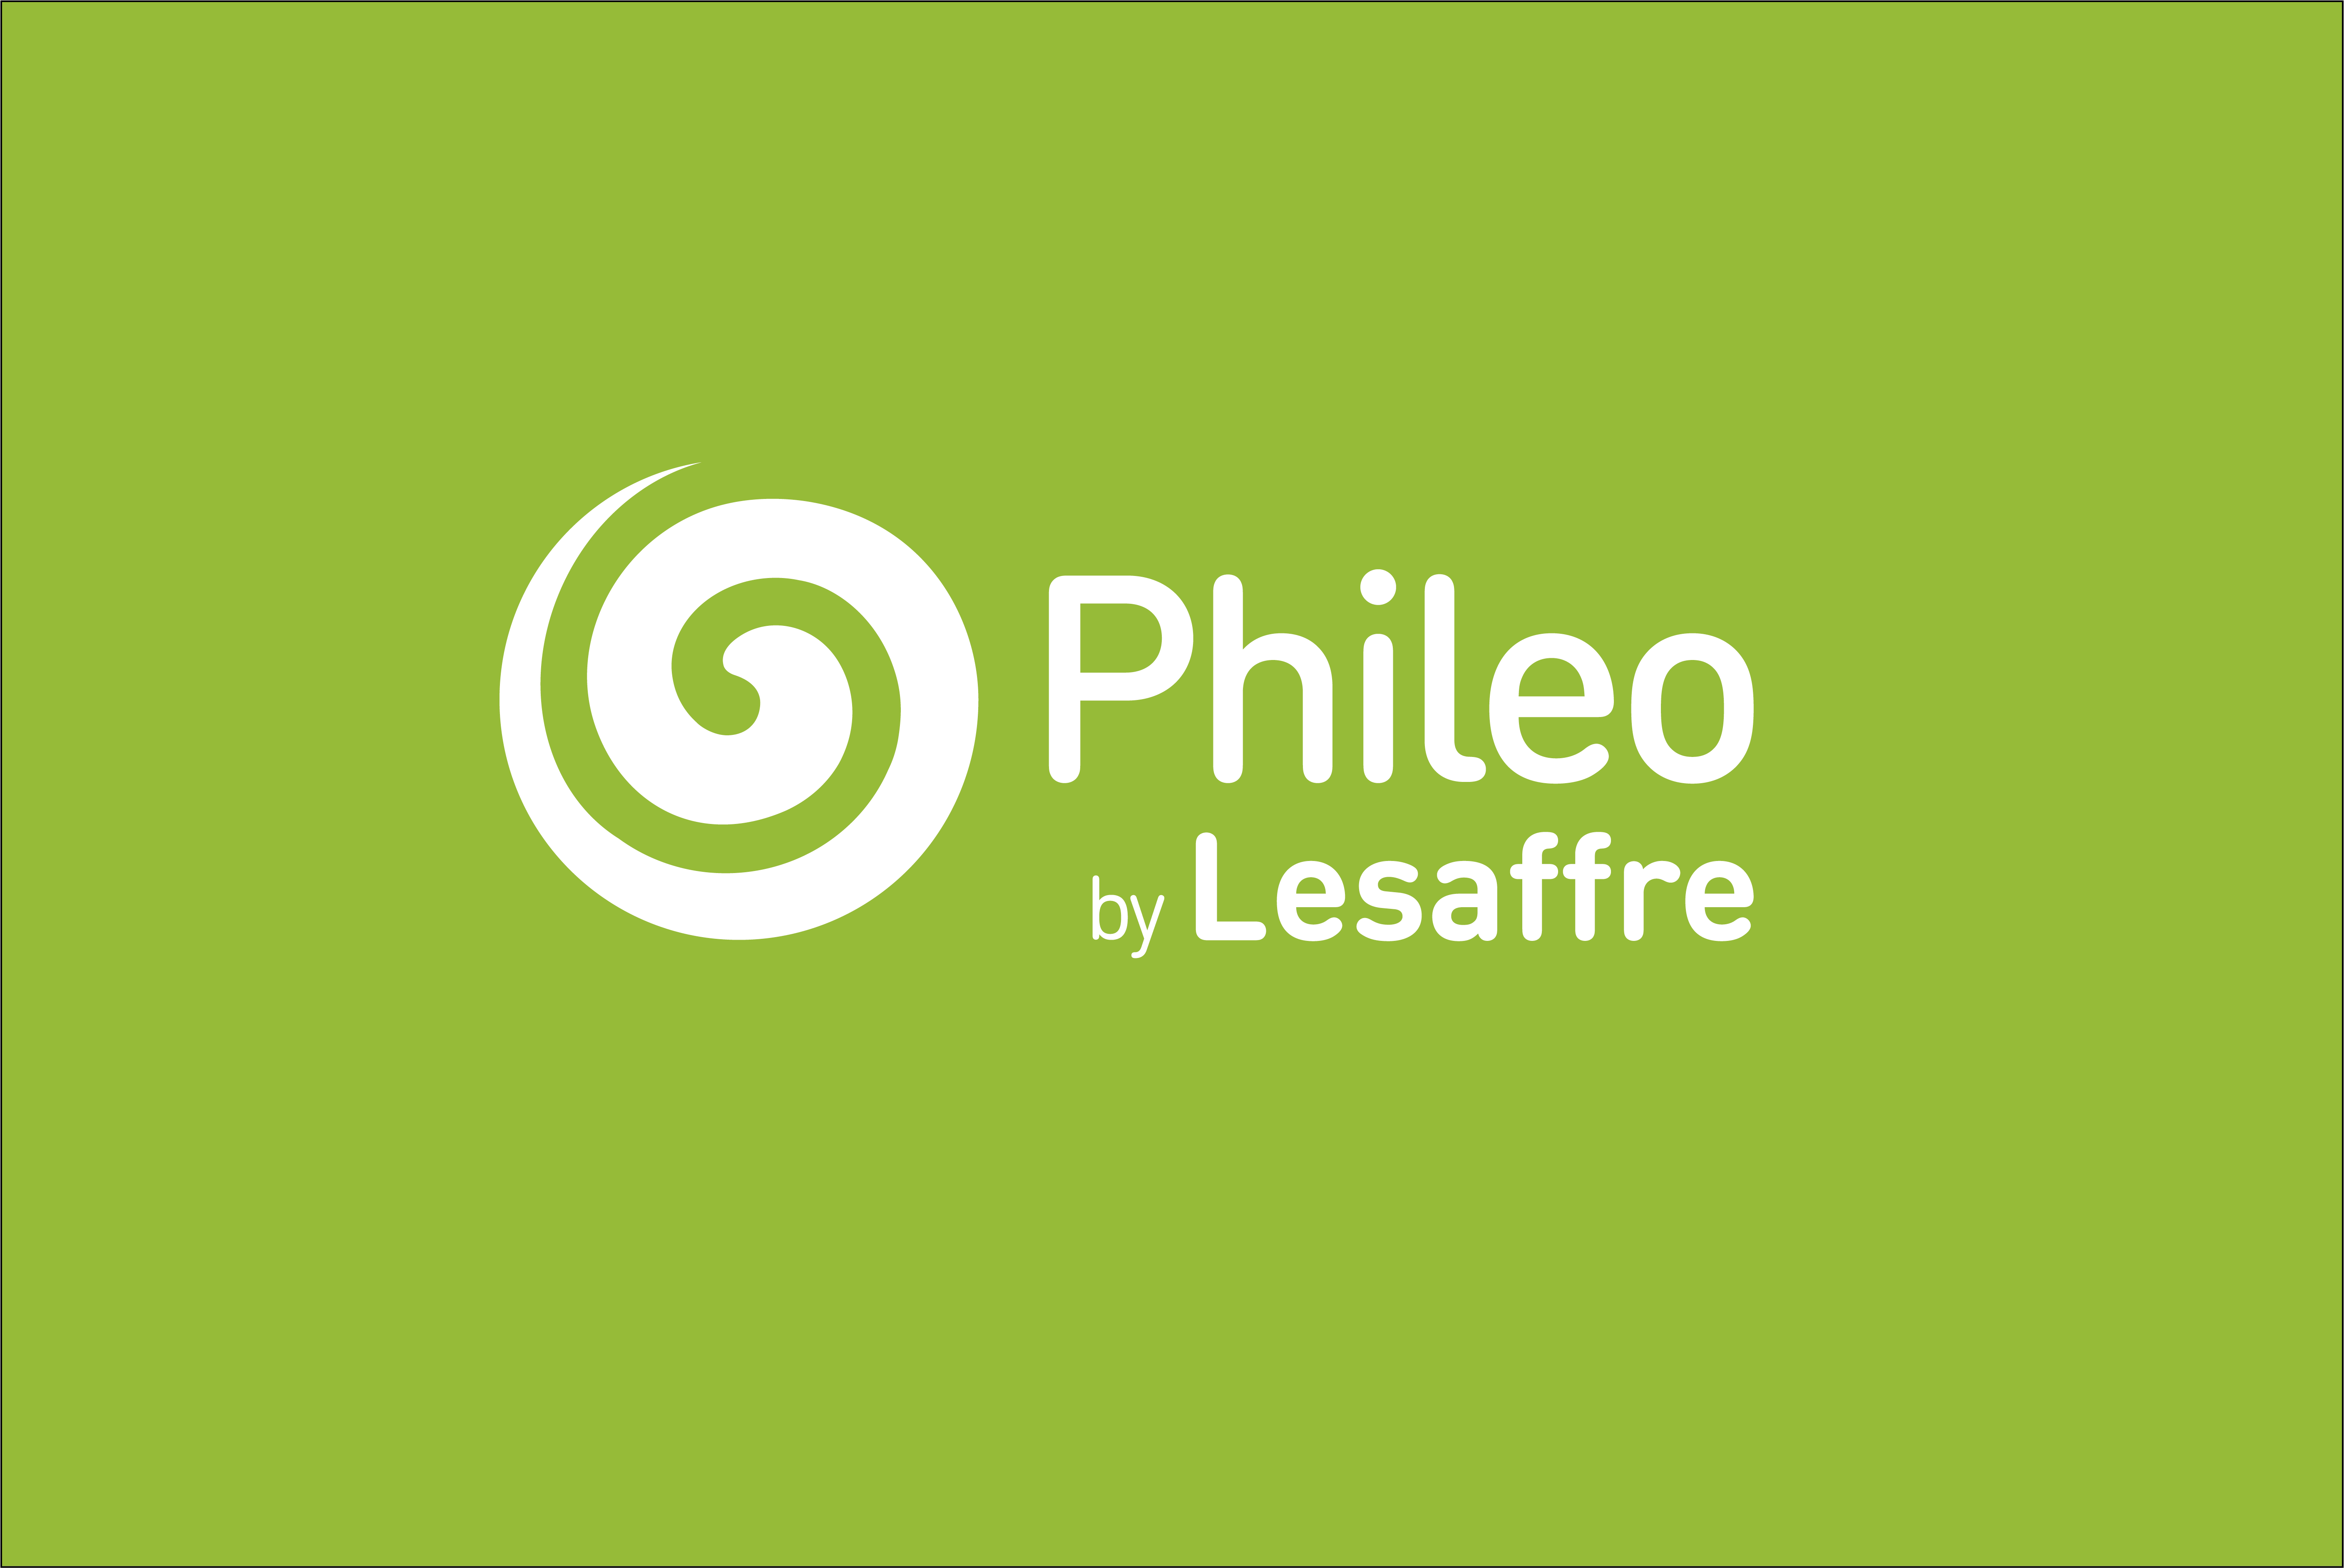 Phileo by Lesaffre